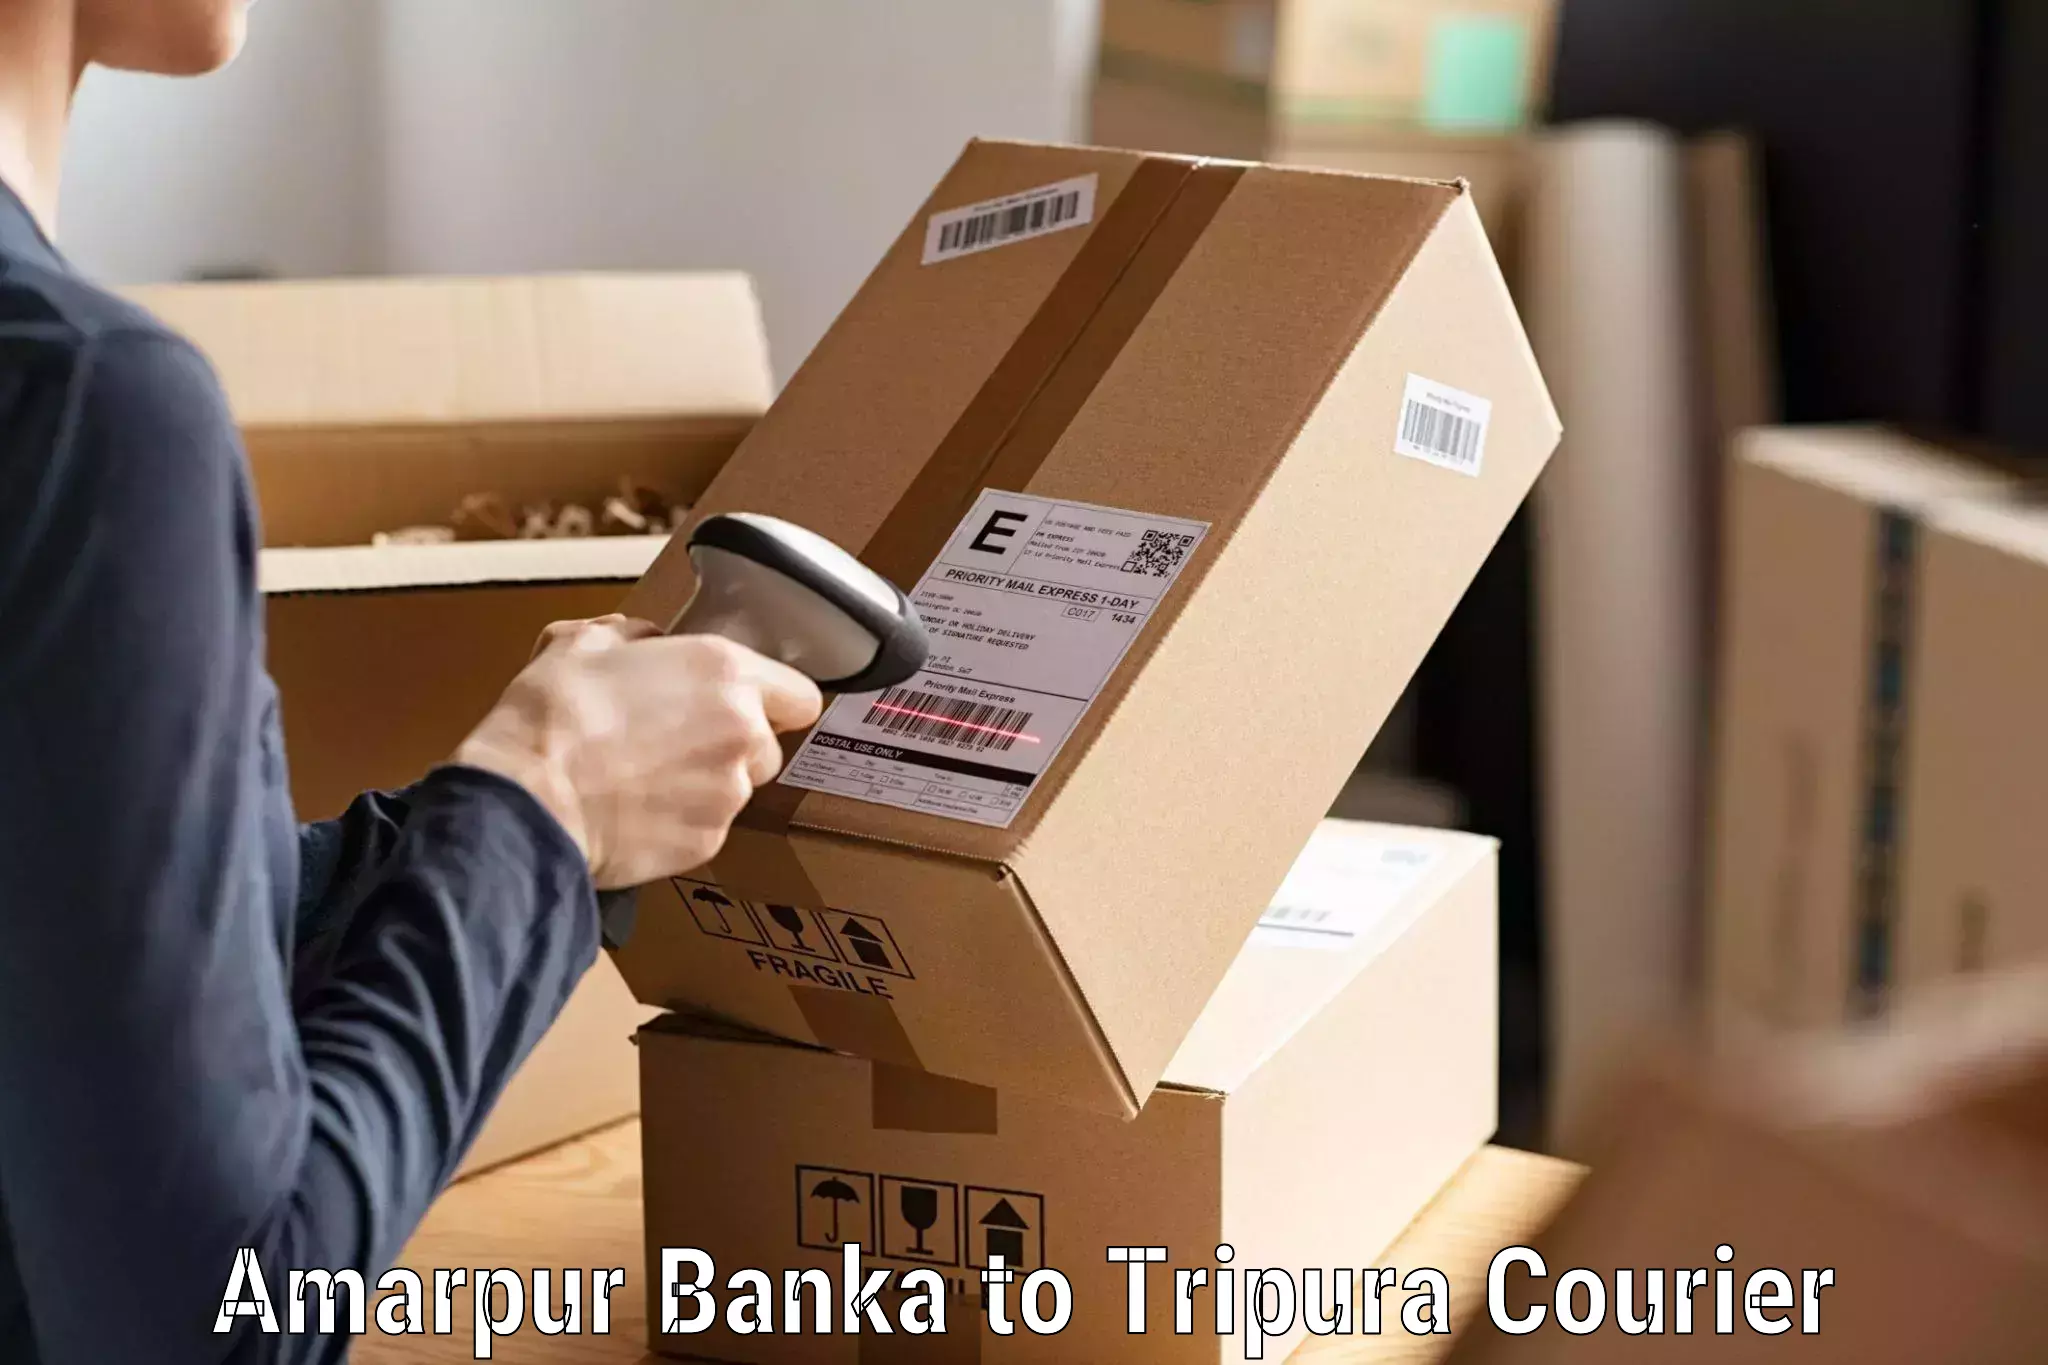 Express courier capabilities in Amarpur Banka to Agartala